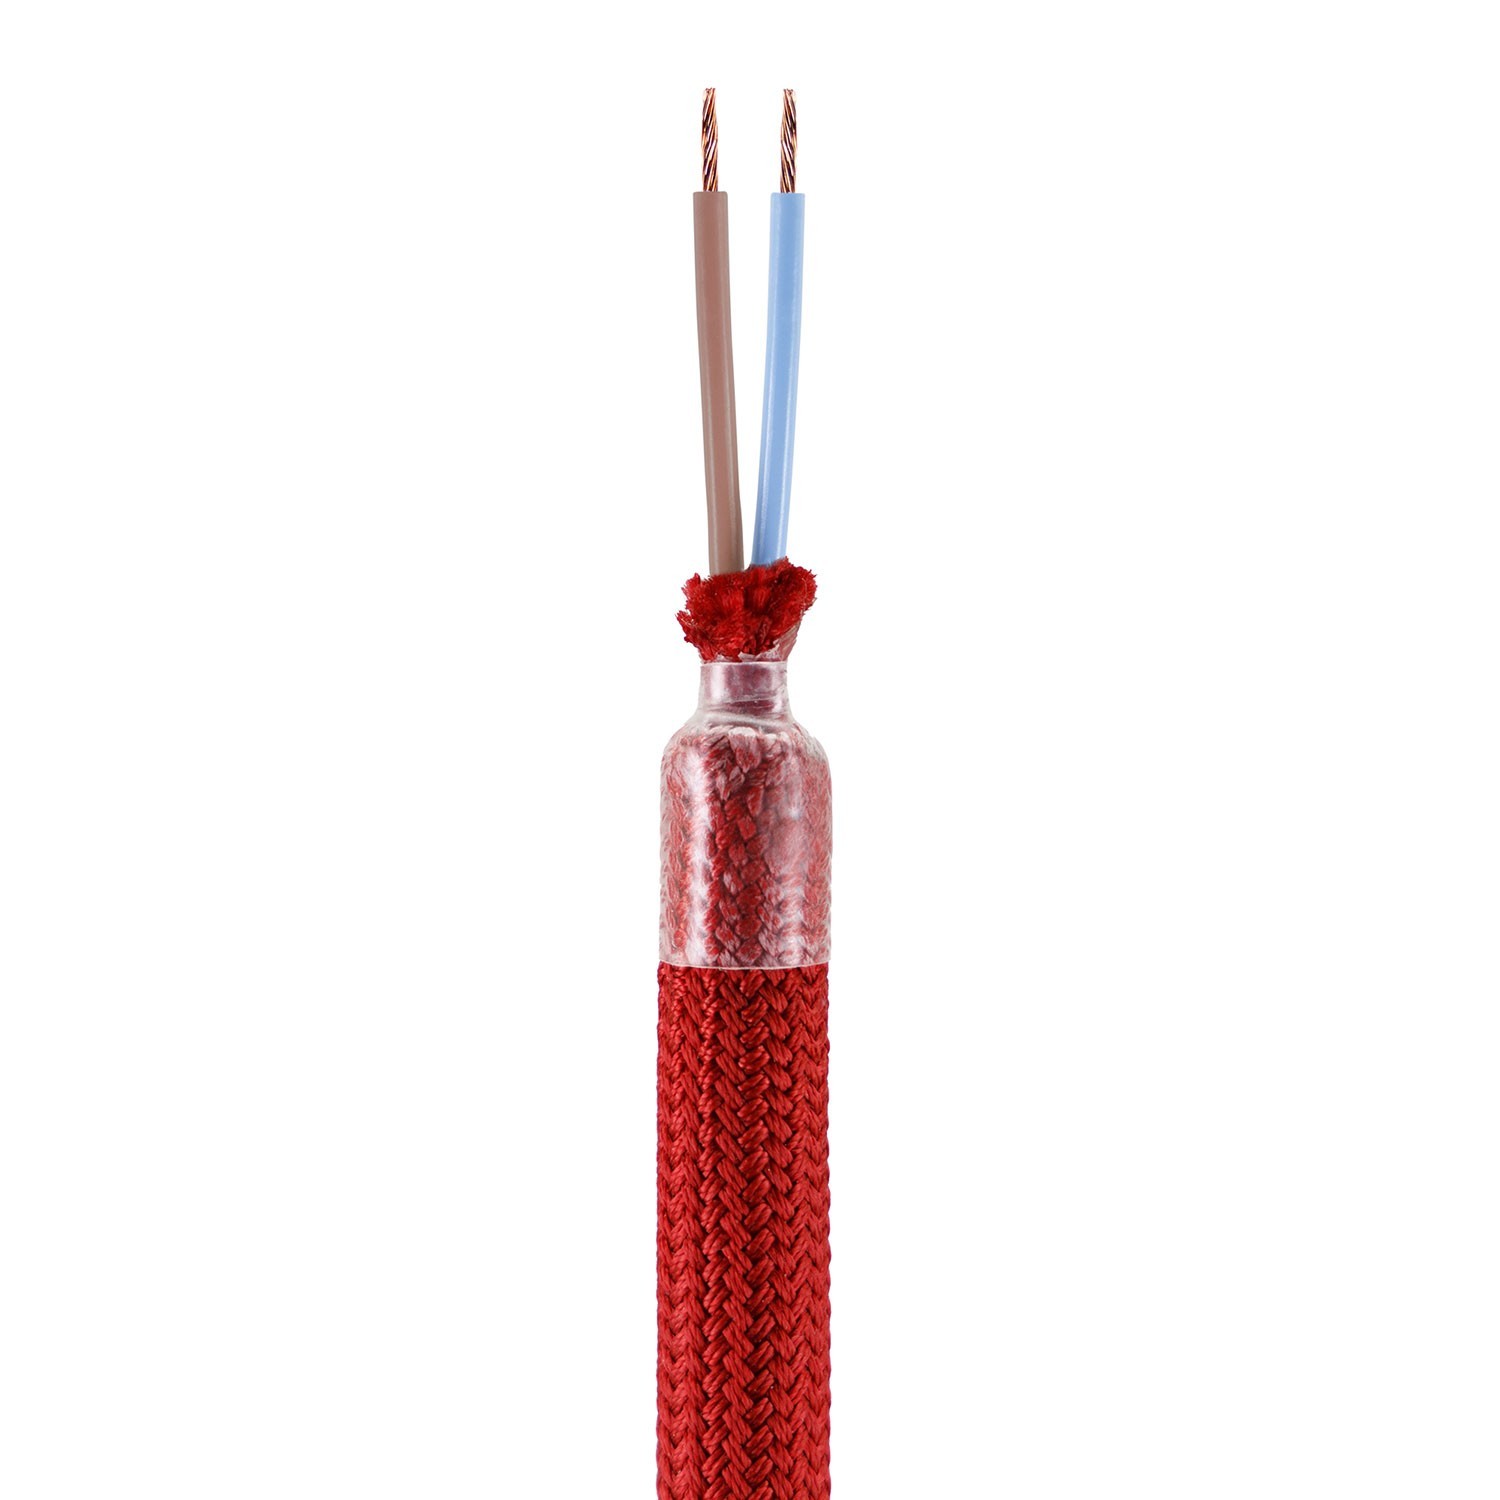 Kit Creative Flex manguera de extensión cubierta de tela RM09 Rojo con extremos metálicos